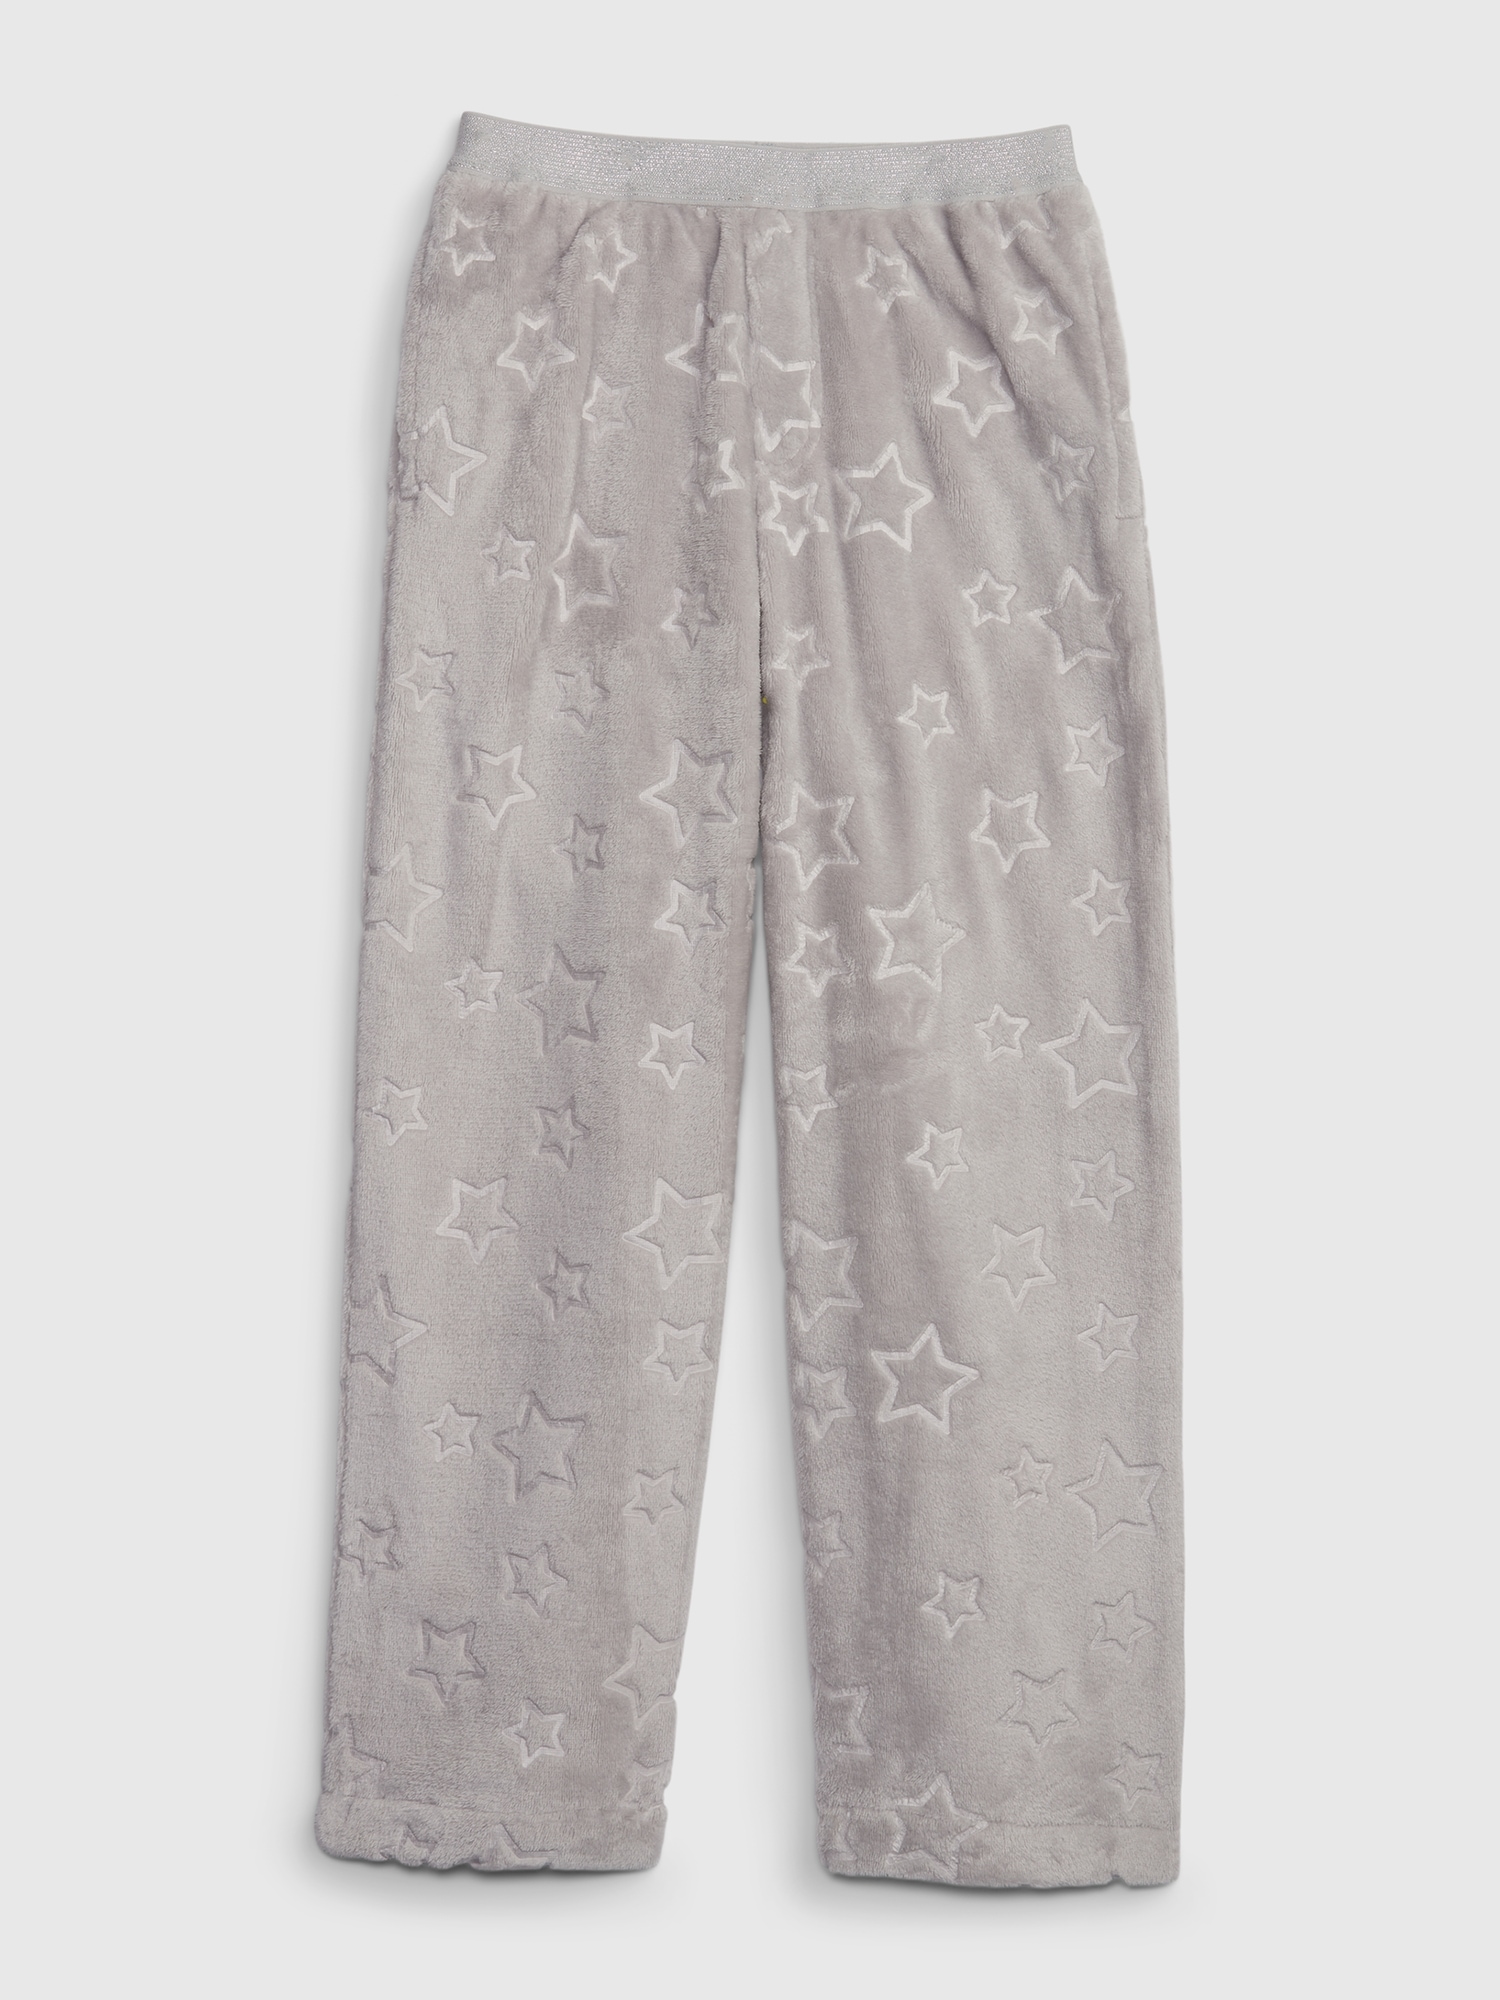 Hanes Men's and Big Men's 100% Cotton Flannel Pajama Pants, 2-Pack -  Walmart.com